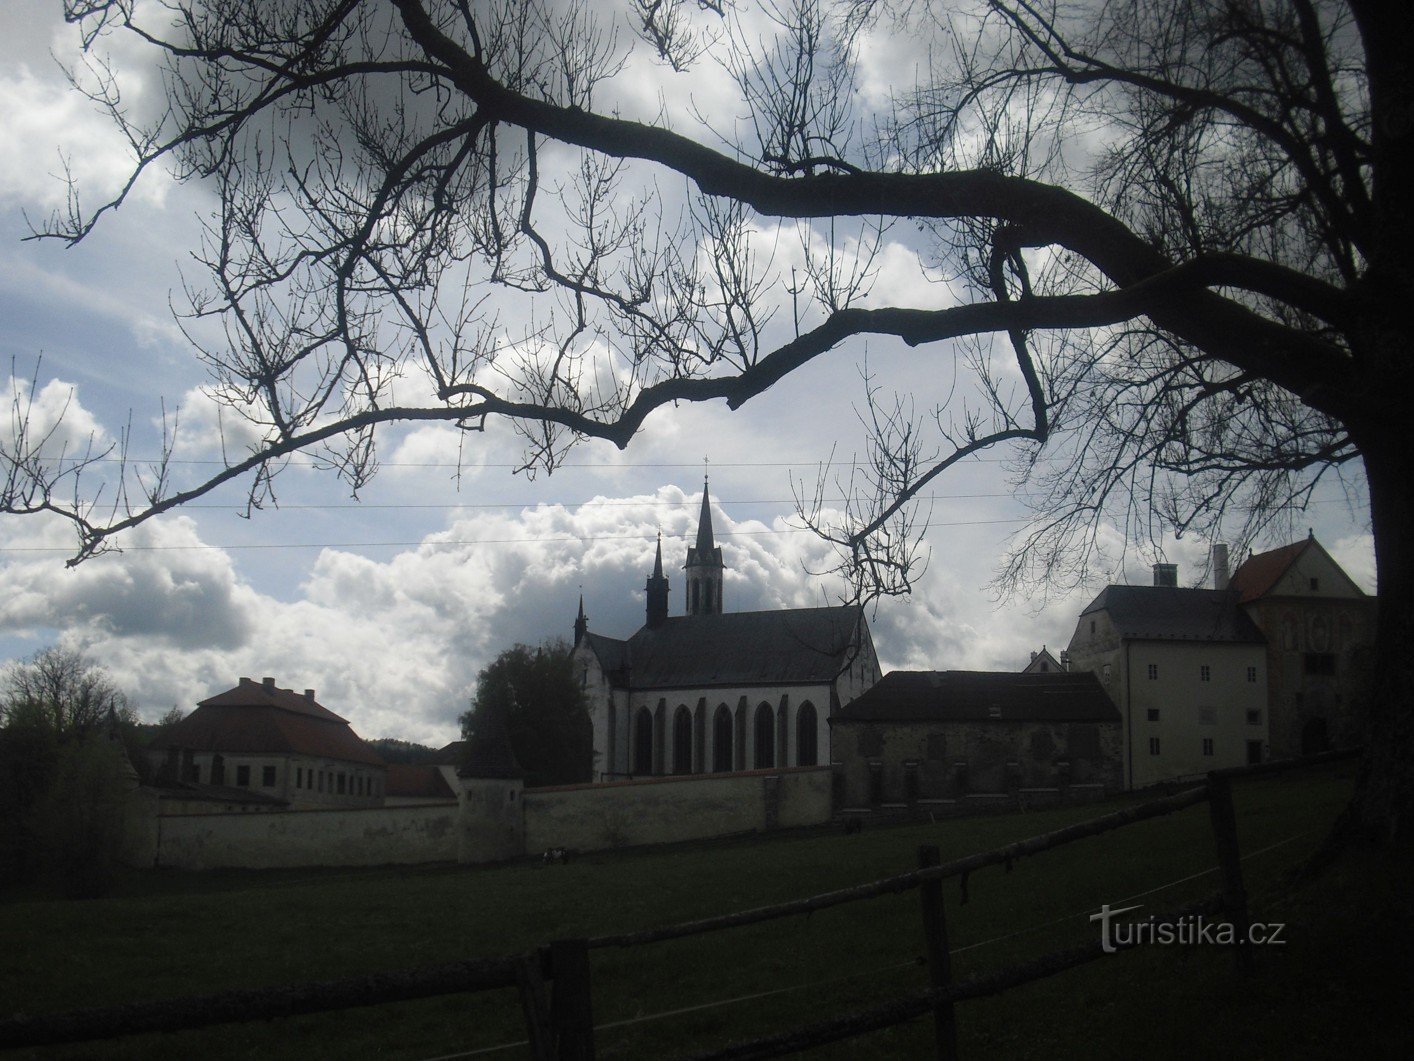 Vyšší Brod i klasztor cystersów